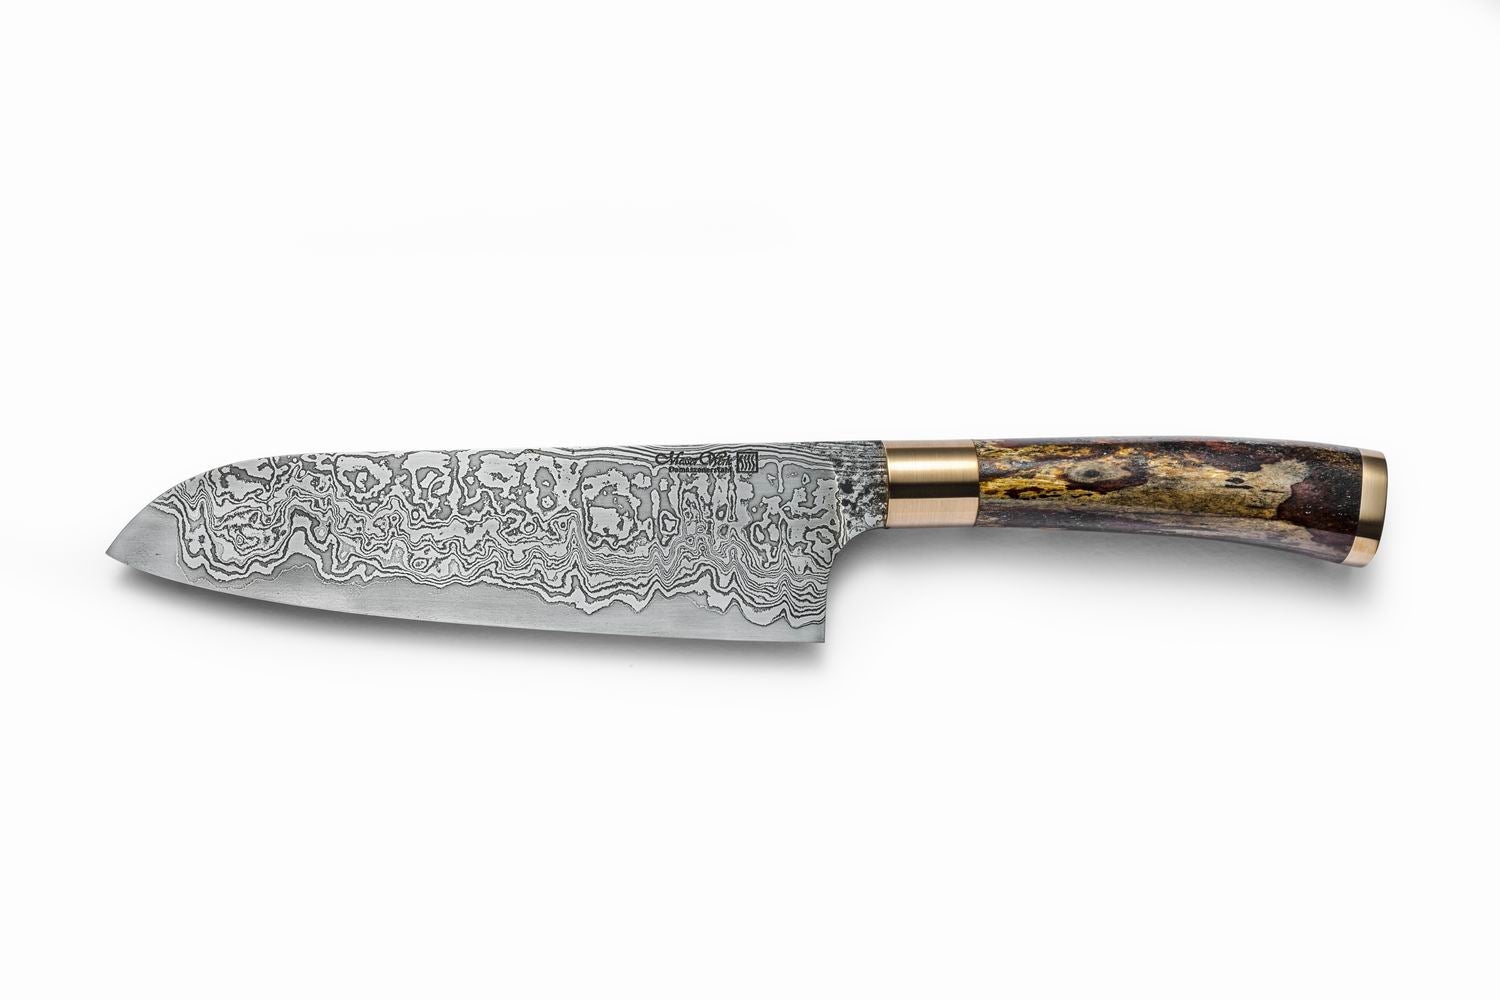 CUSTOM HANDMADE FORGED DAMASCUS STEEL CHEF KNIFE KITCHEN SANTOKU KNIFE 1280